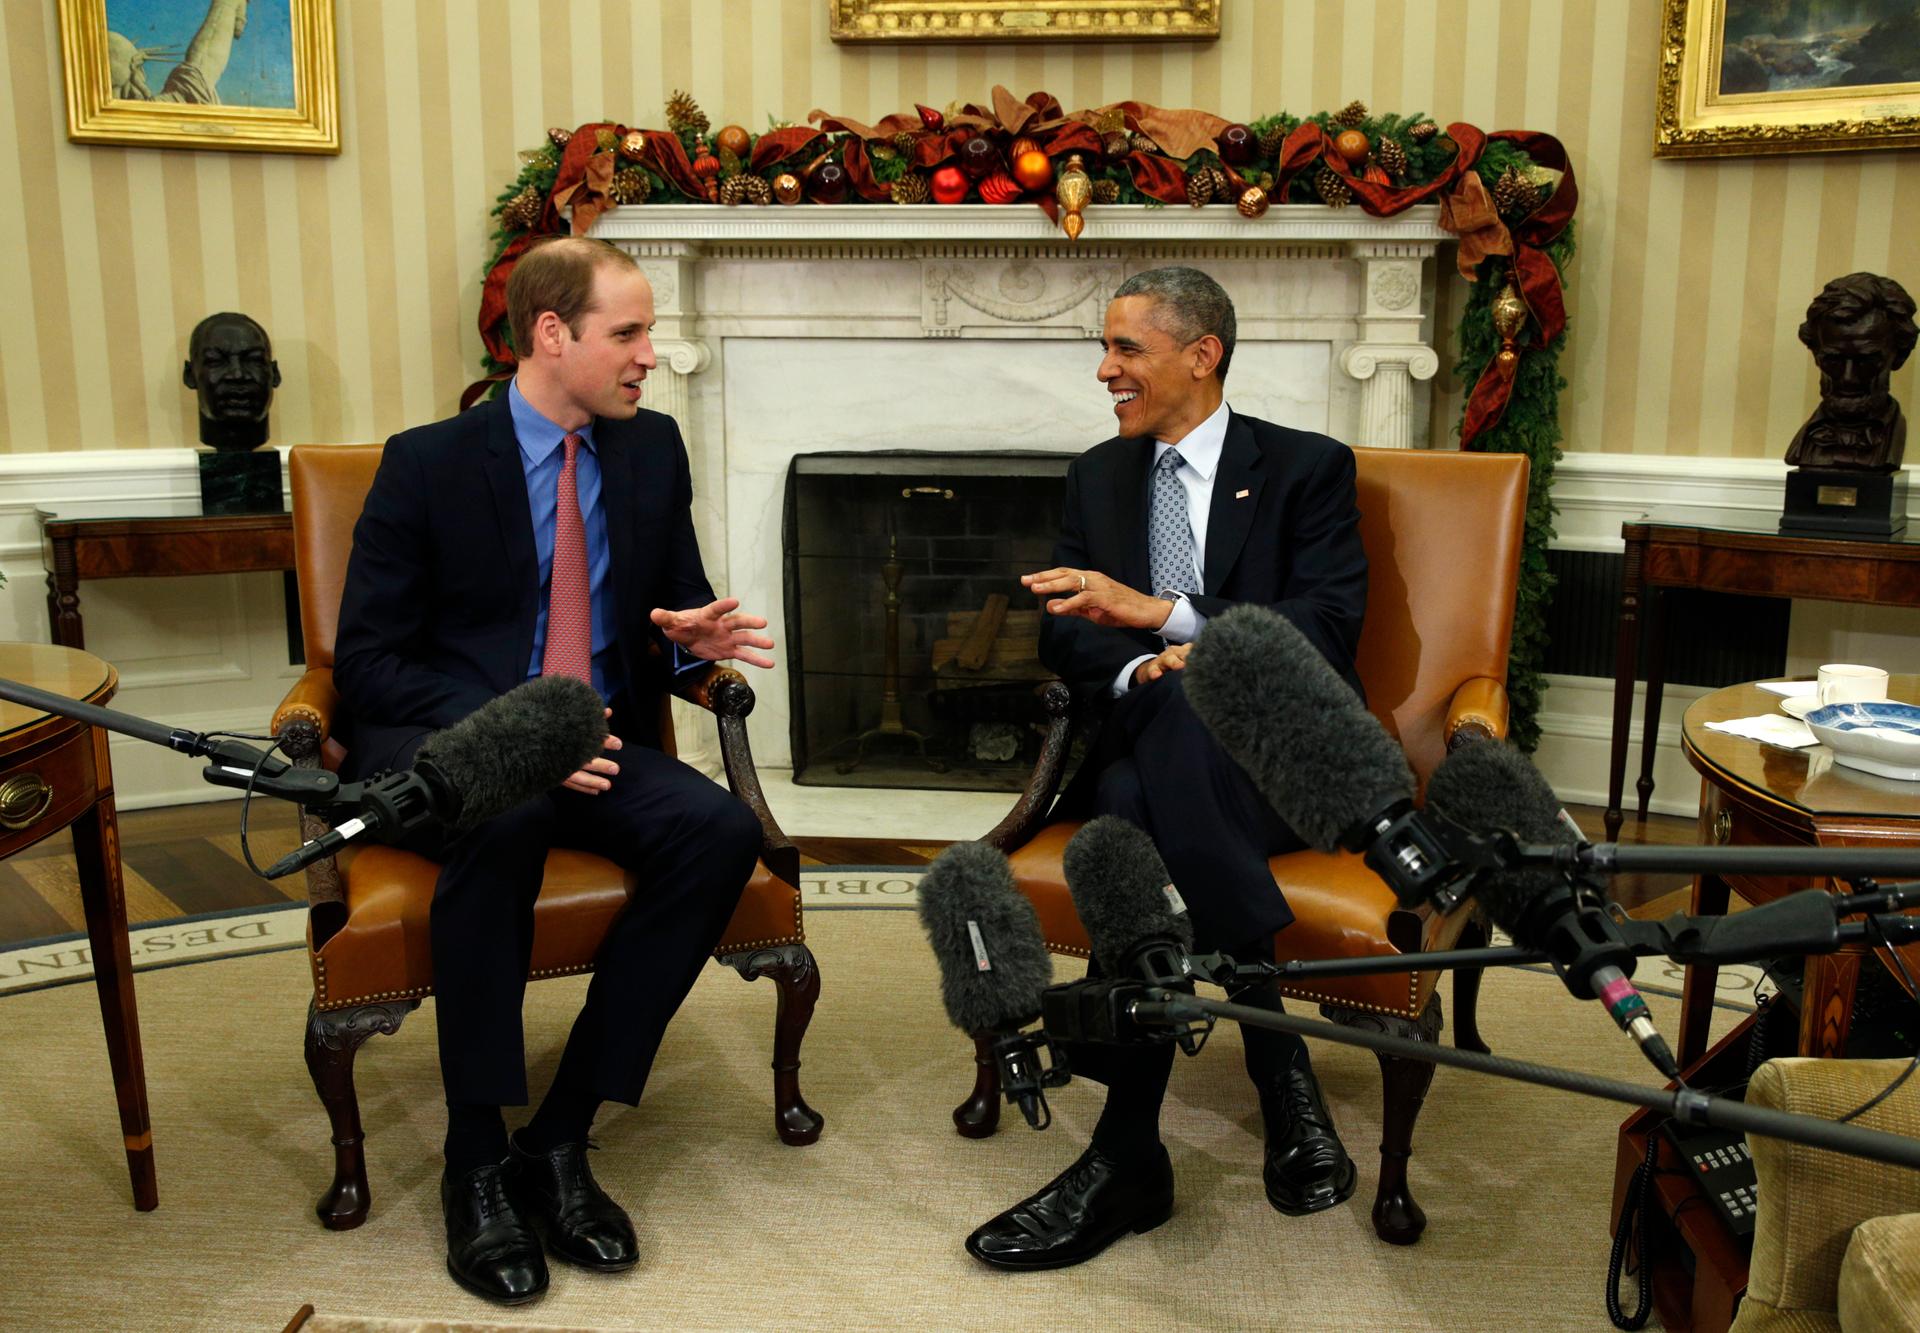 US President Barack Obama meets Britain's Prince William